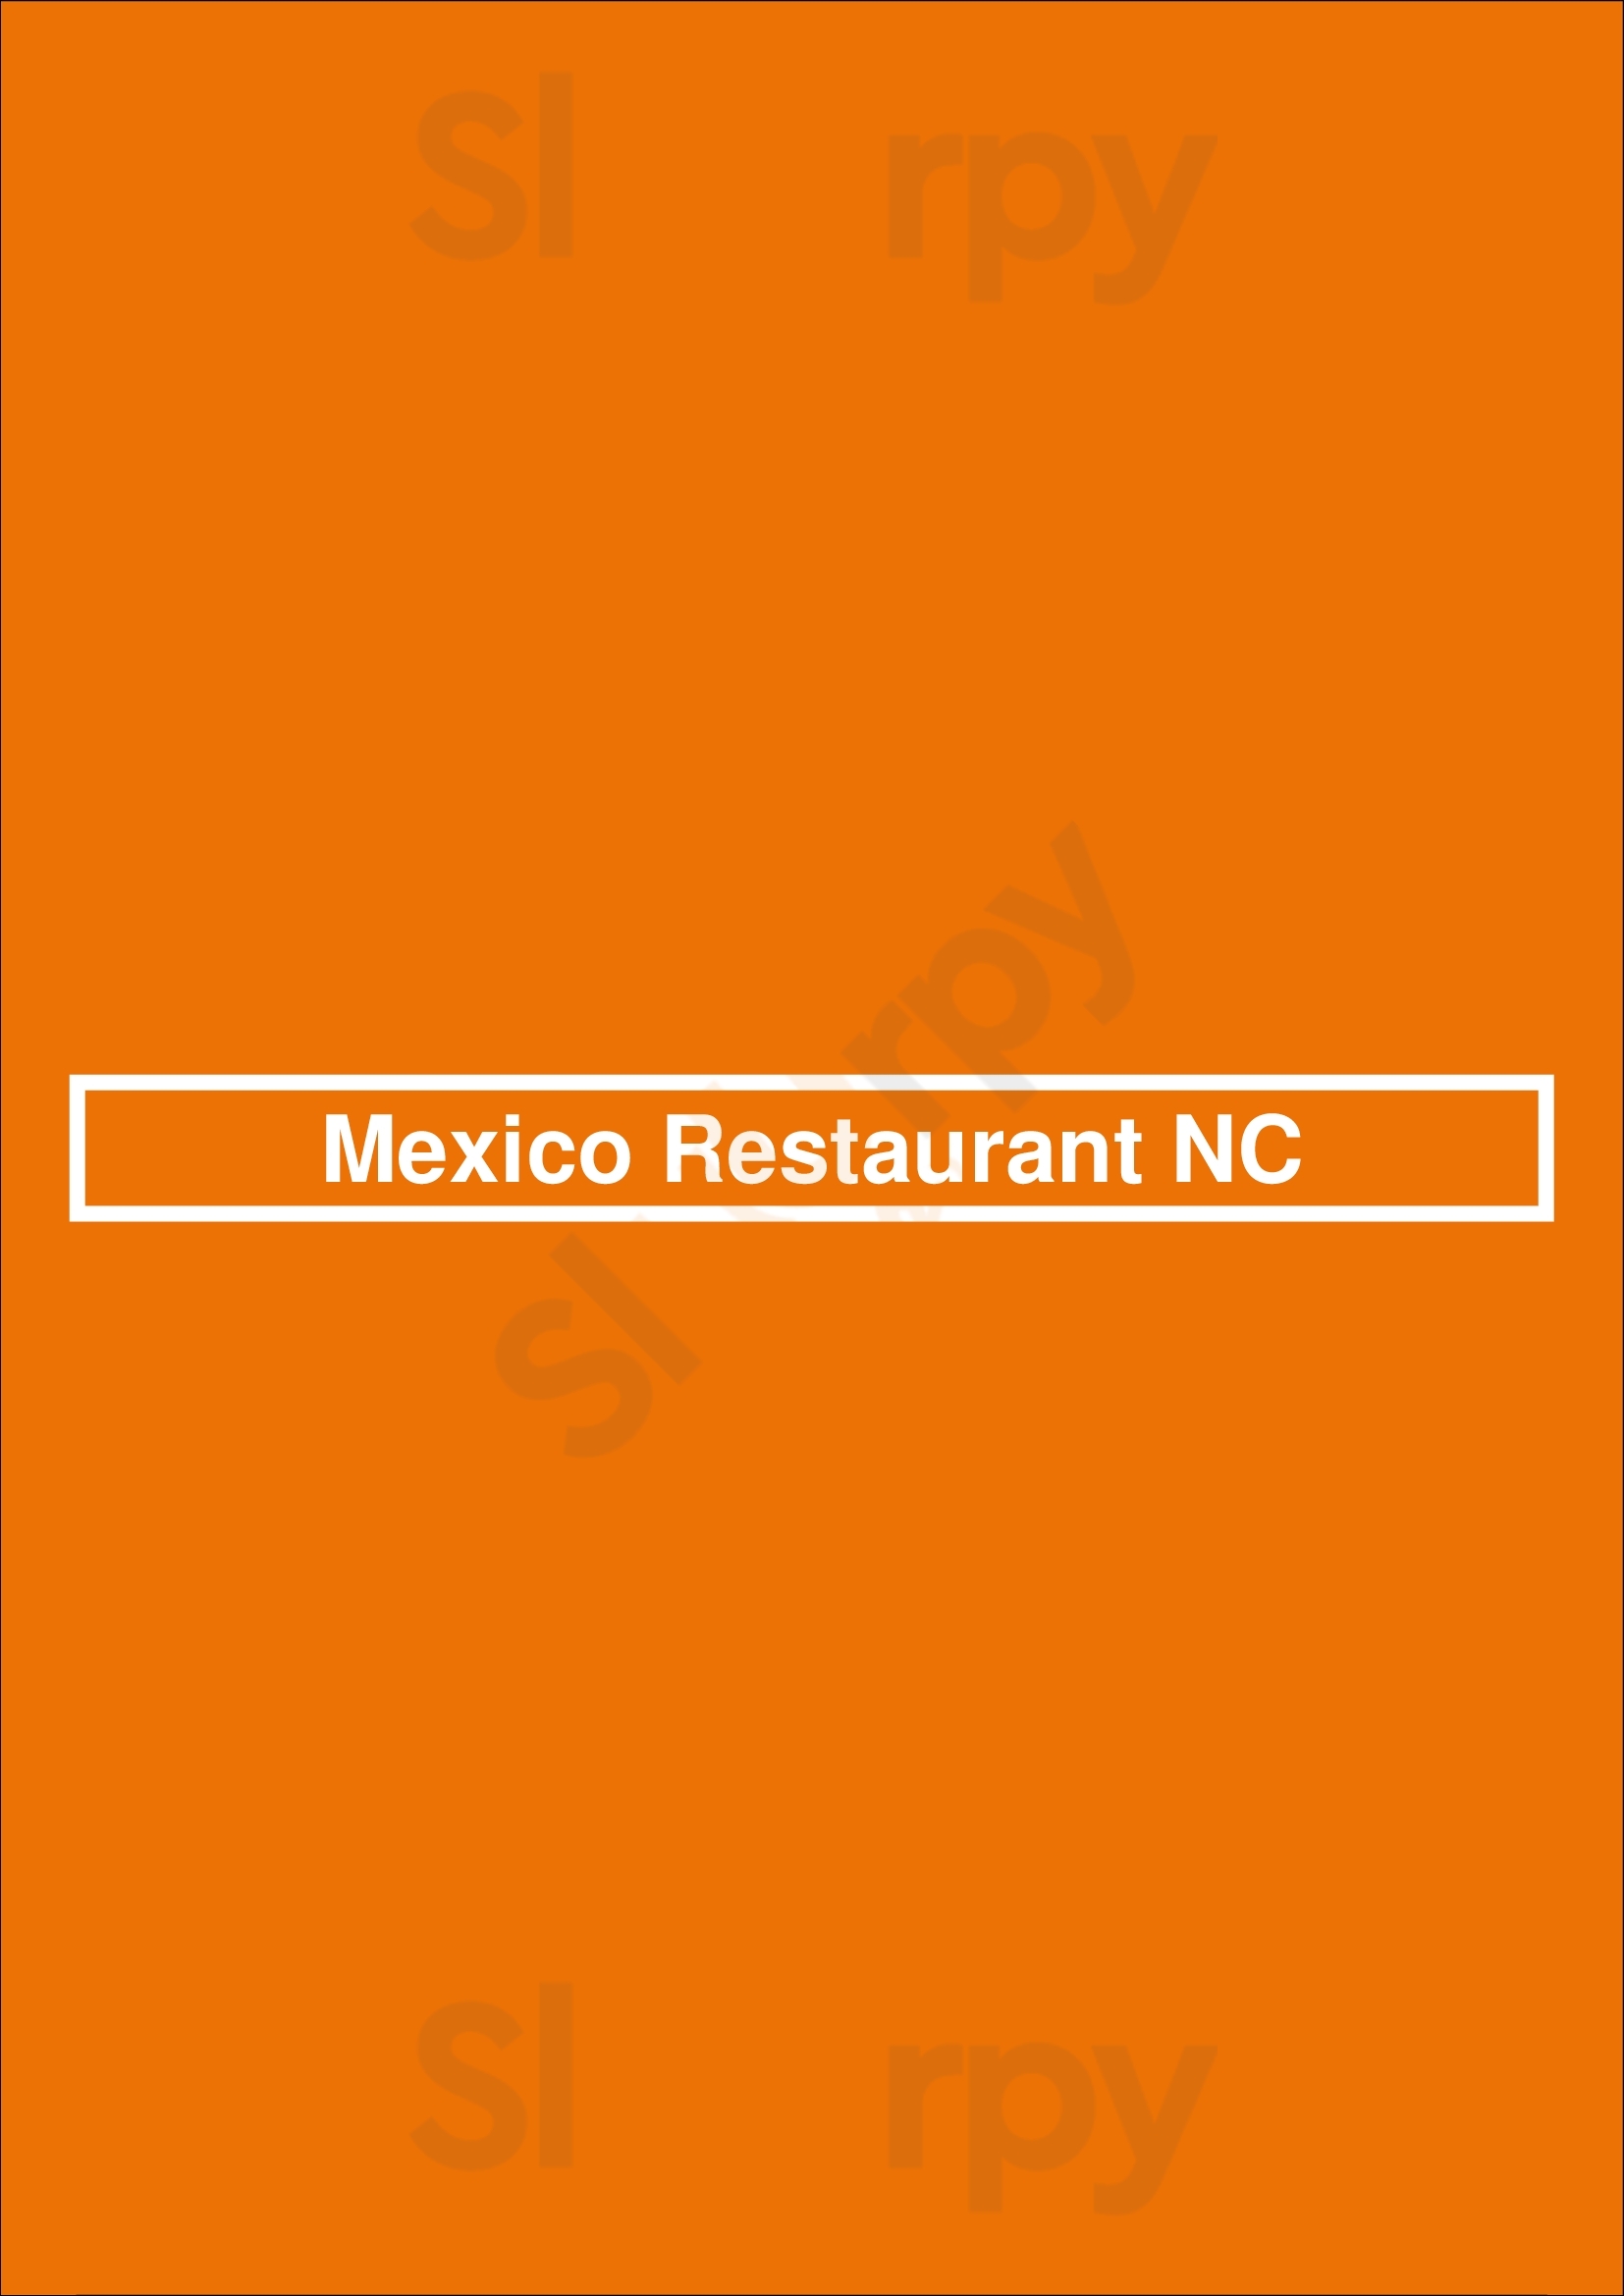 Mexico Restaurant Nc Greensboro Menu - 1